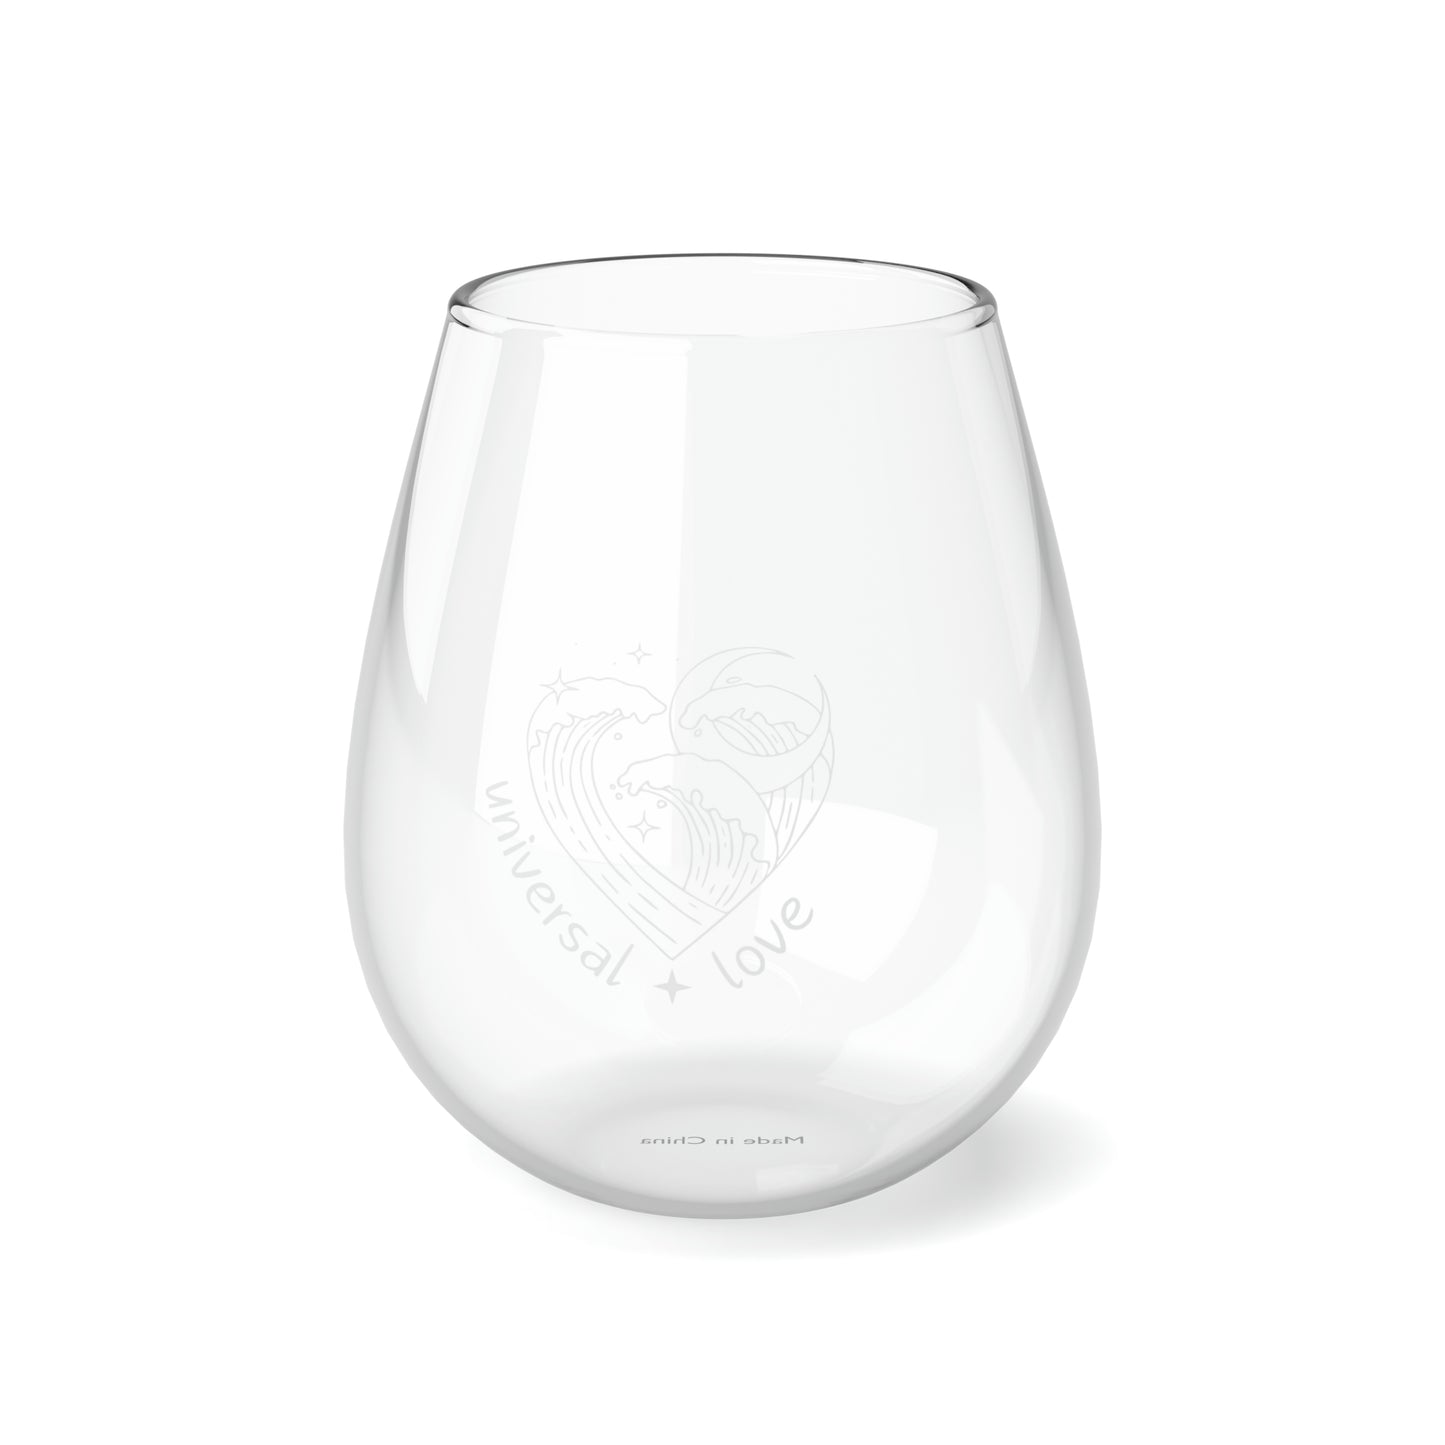 Universal Love Stemless Wine Glass - White, 11.75oz